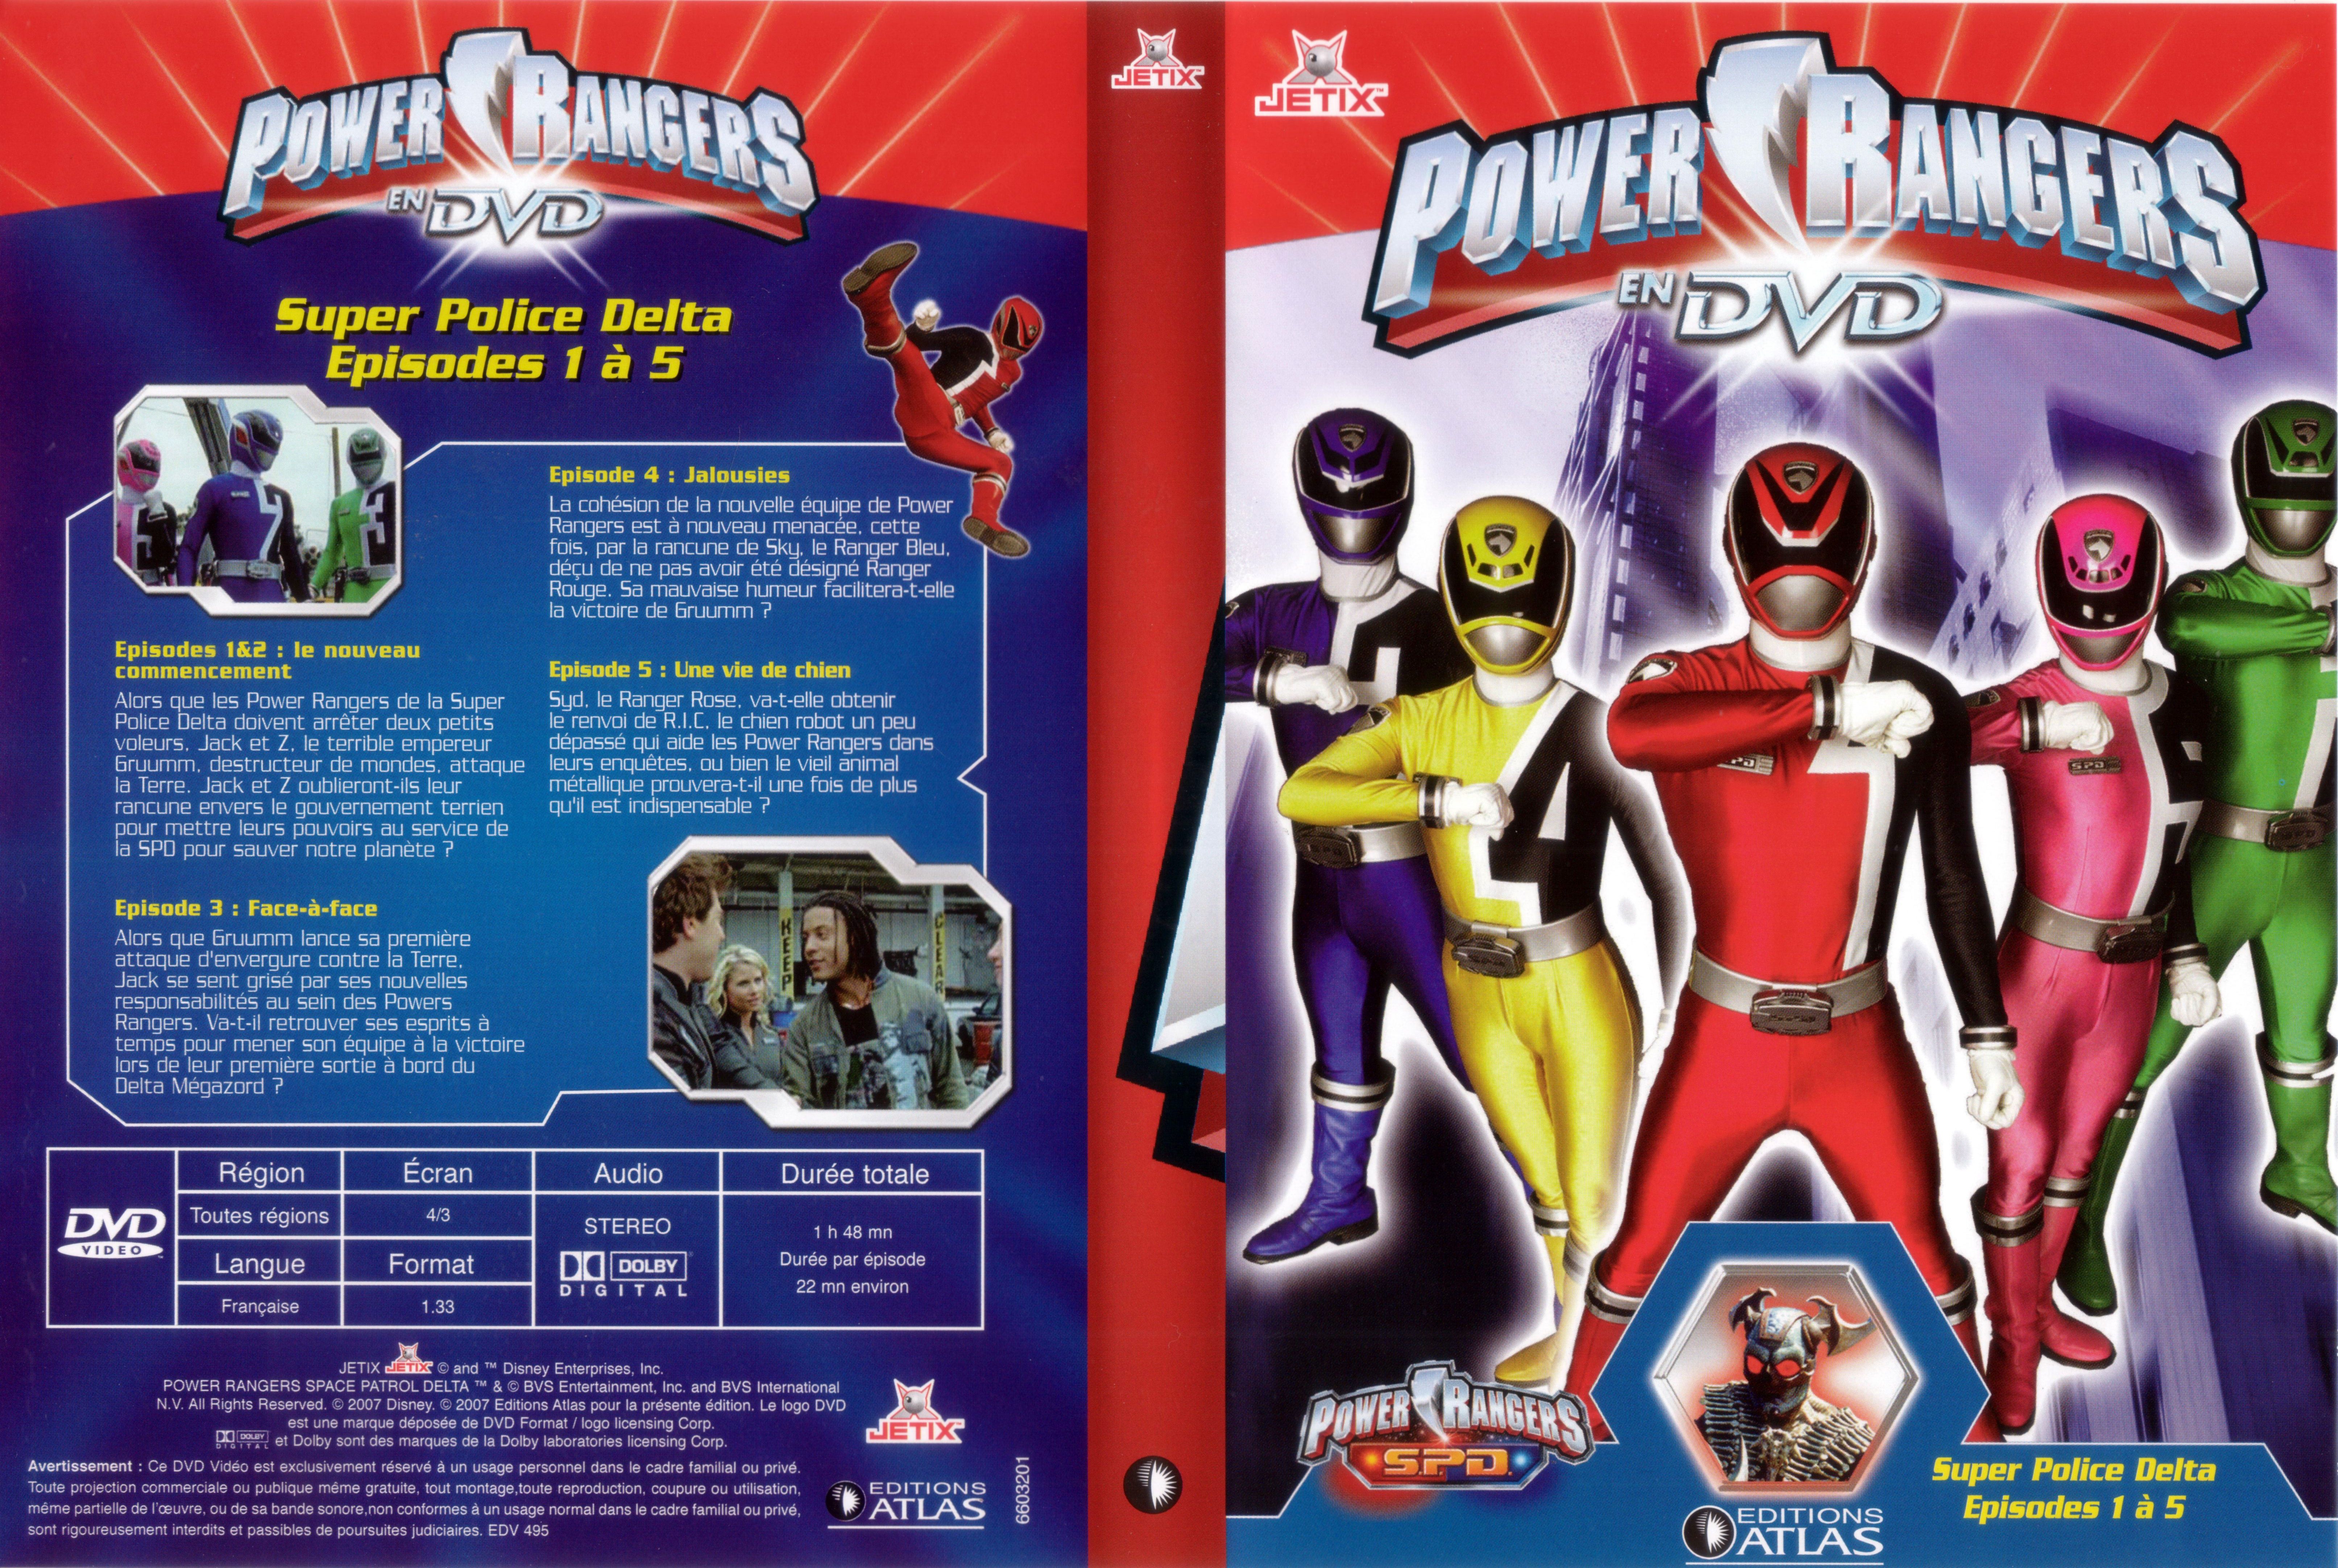 Jaquette DVD Power rangers DVD 1 (Ed Atlas)